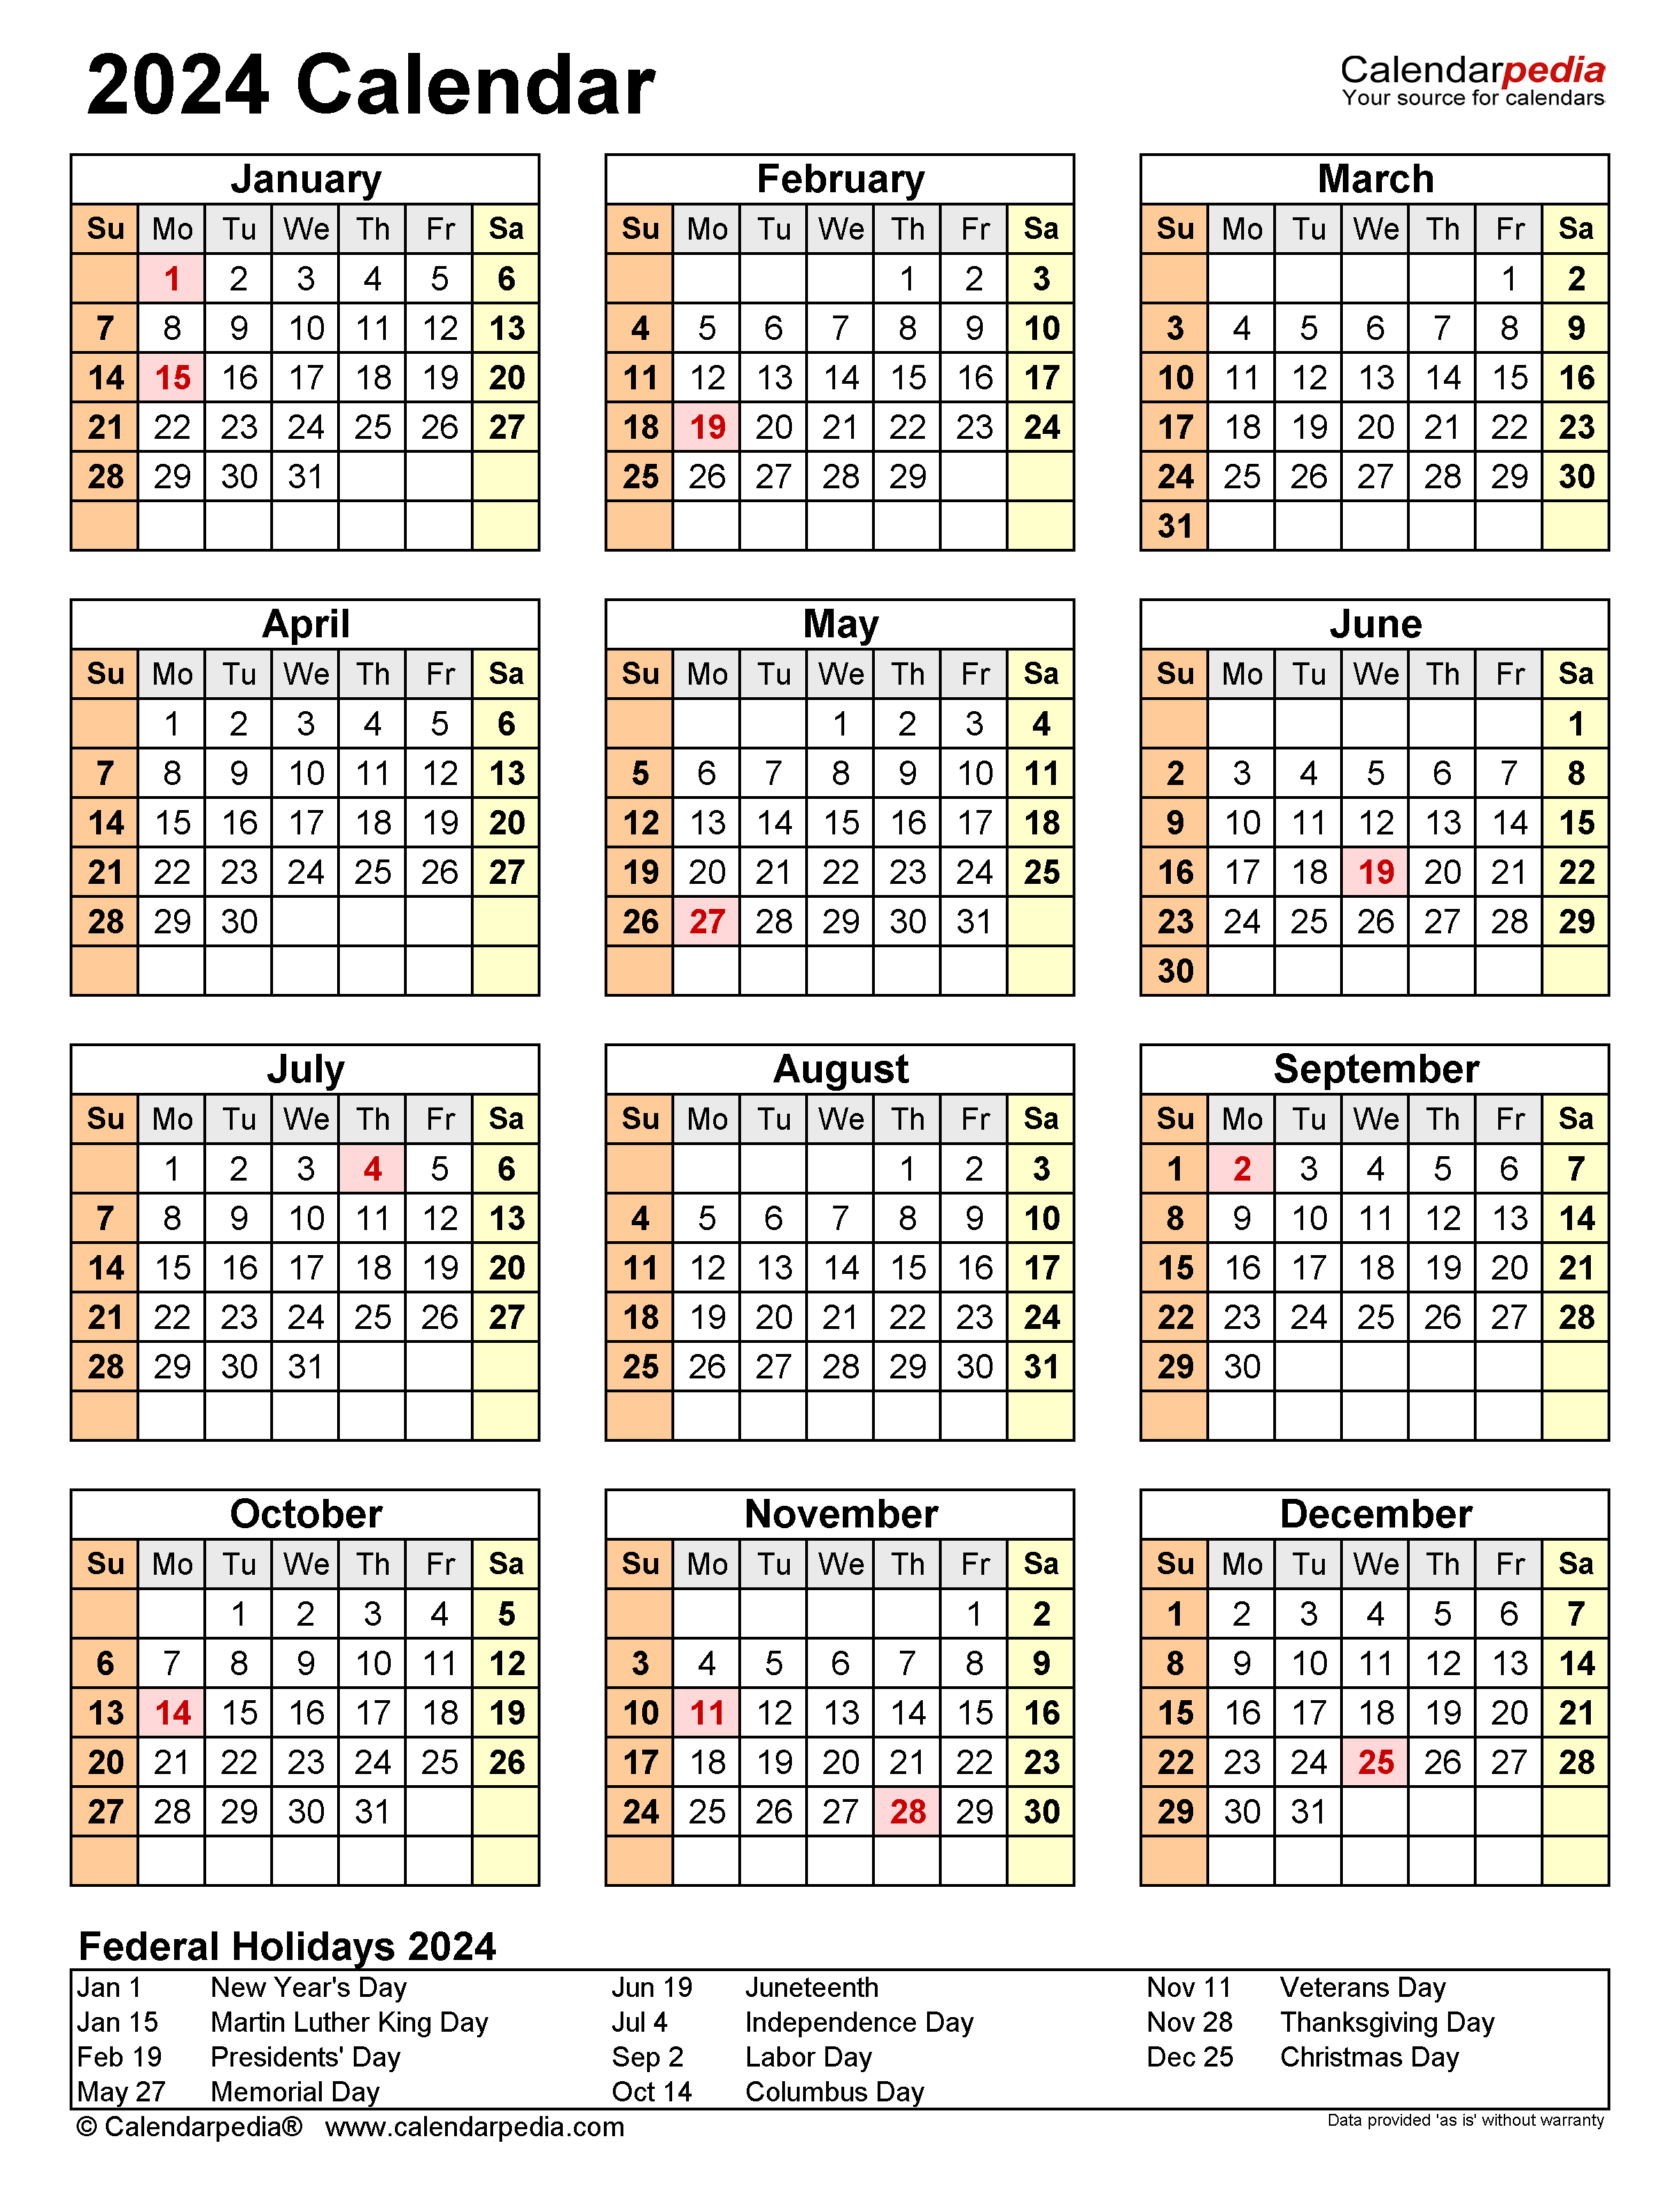 Free Printable 2024 Calendar With Holidays Crownflourmills | Free Printable 2024 Calendar With Holidays Portrait